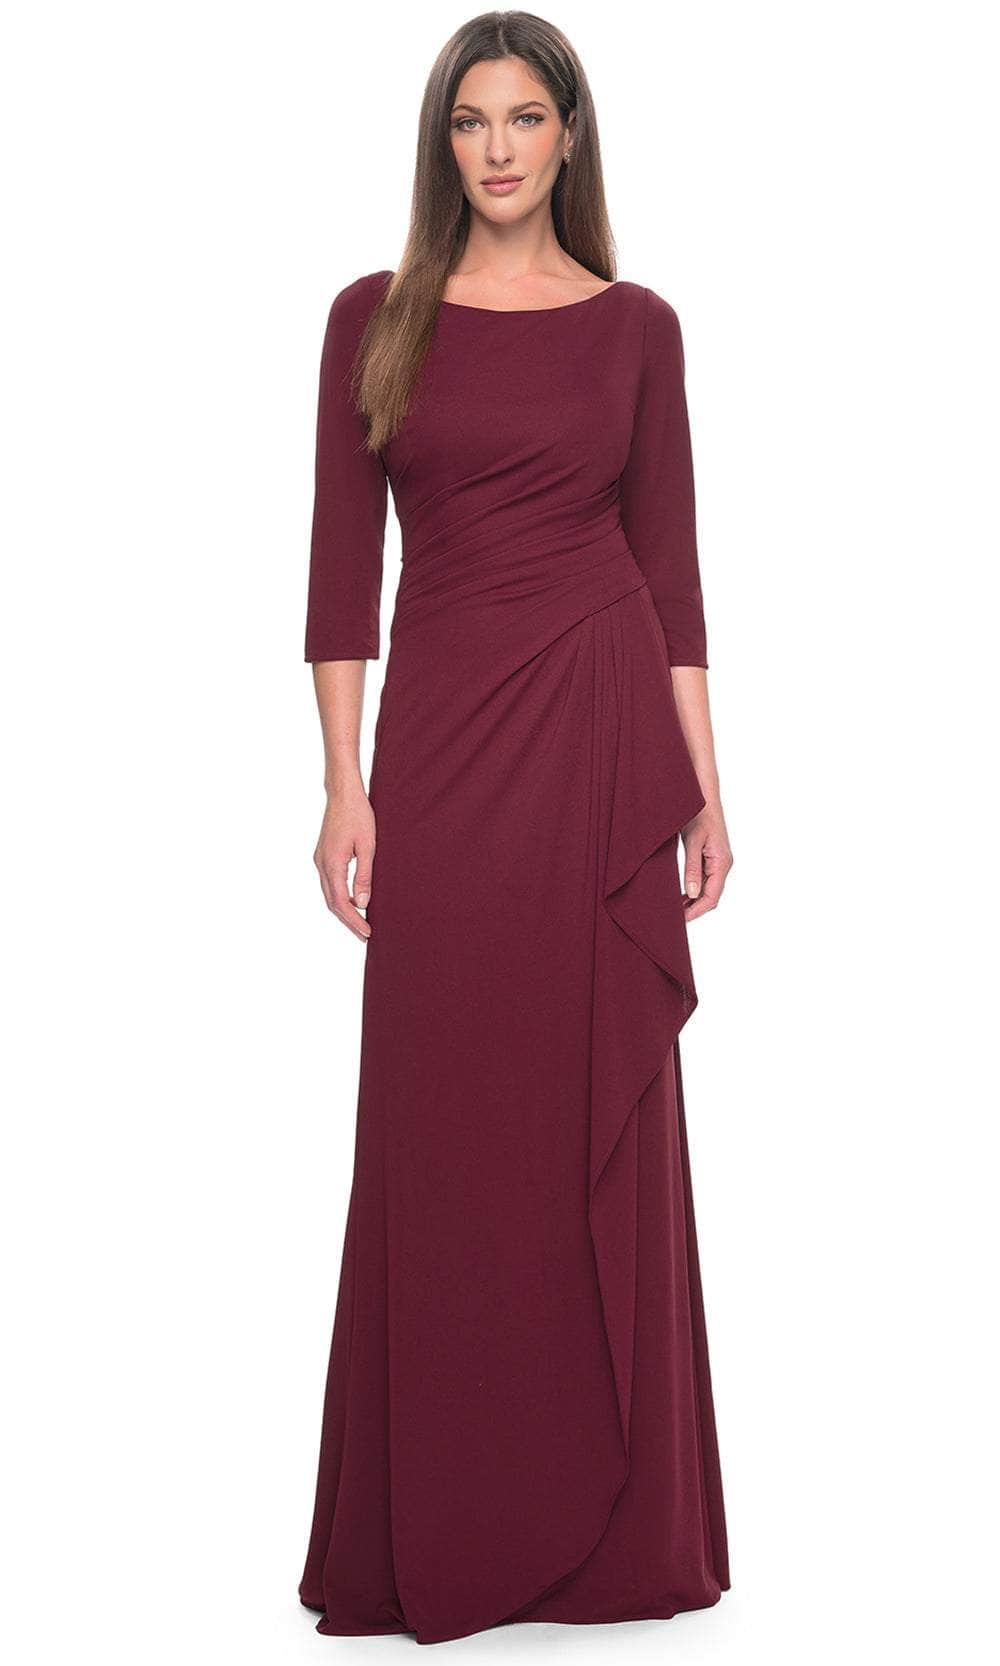 La Femme 31705 - Draped Bateau Formal Dress Evening Dresses